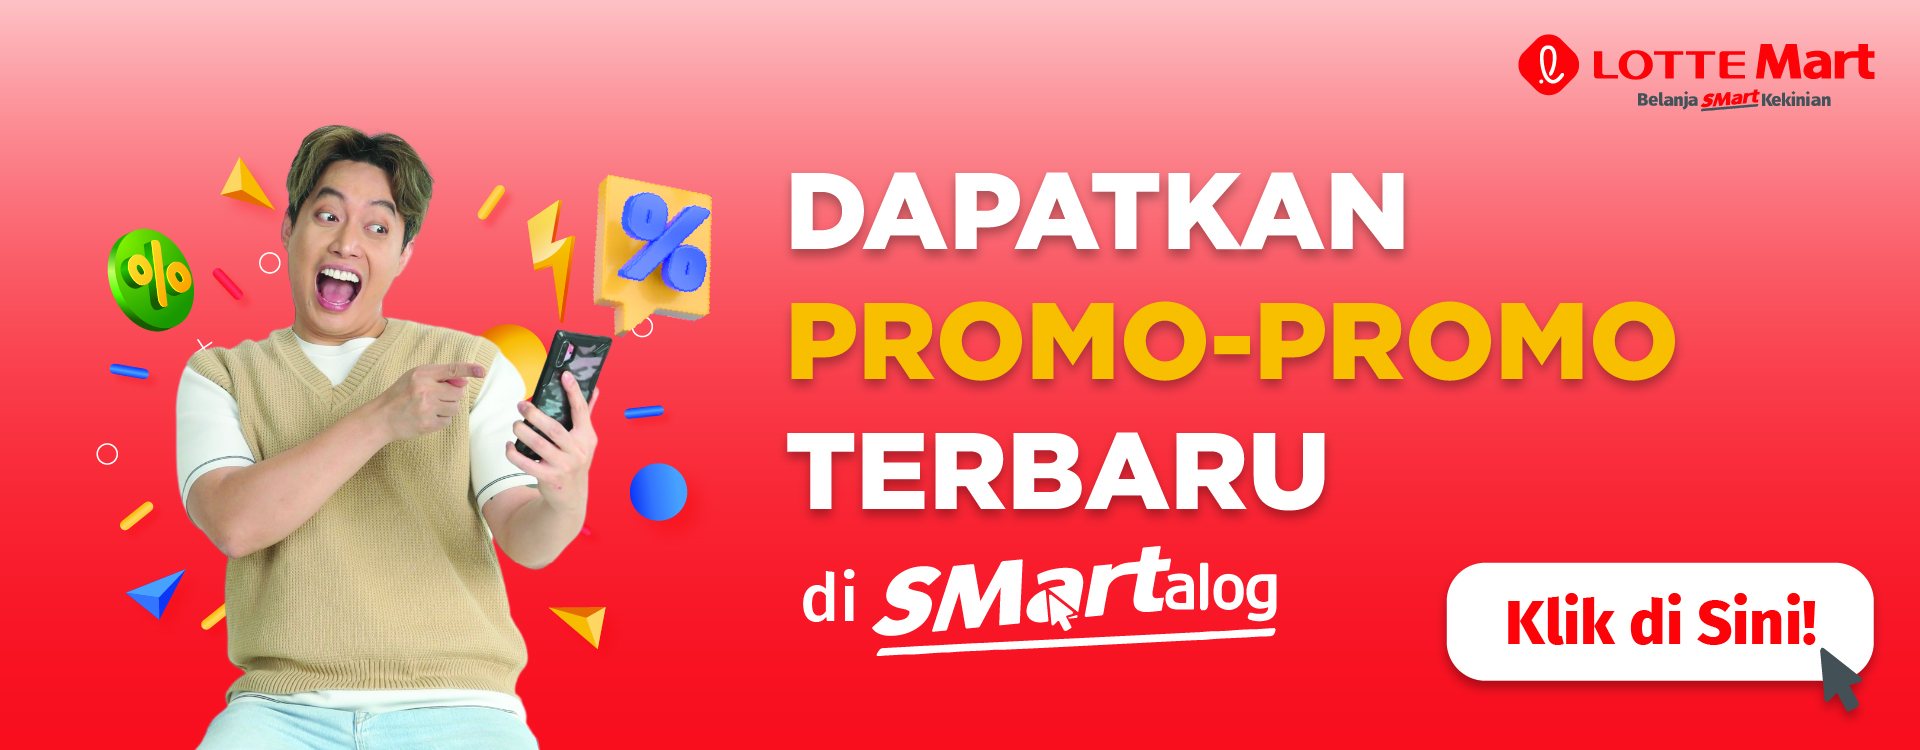 https://lottemart.co.id/Smartalog Promo Terbaru